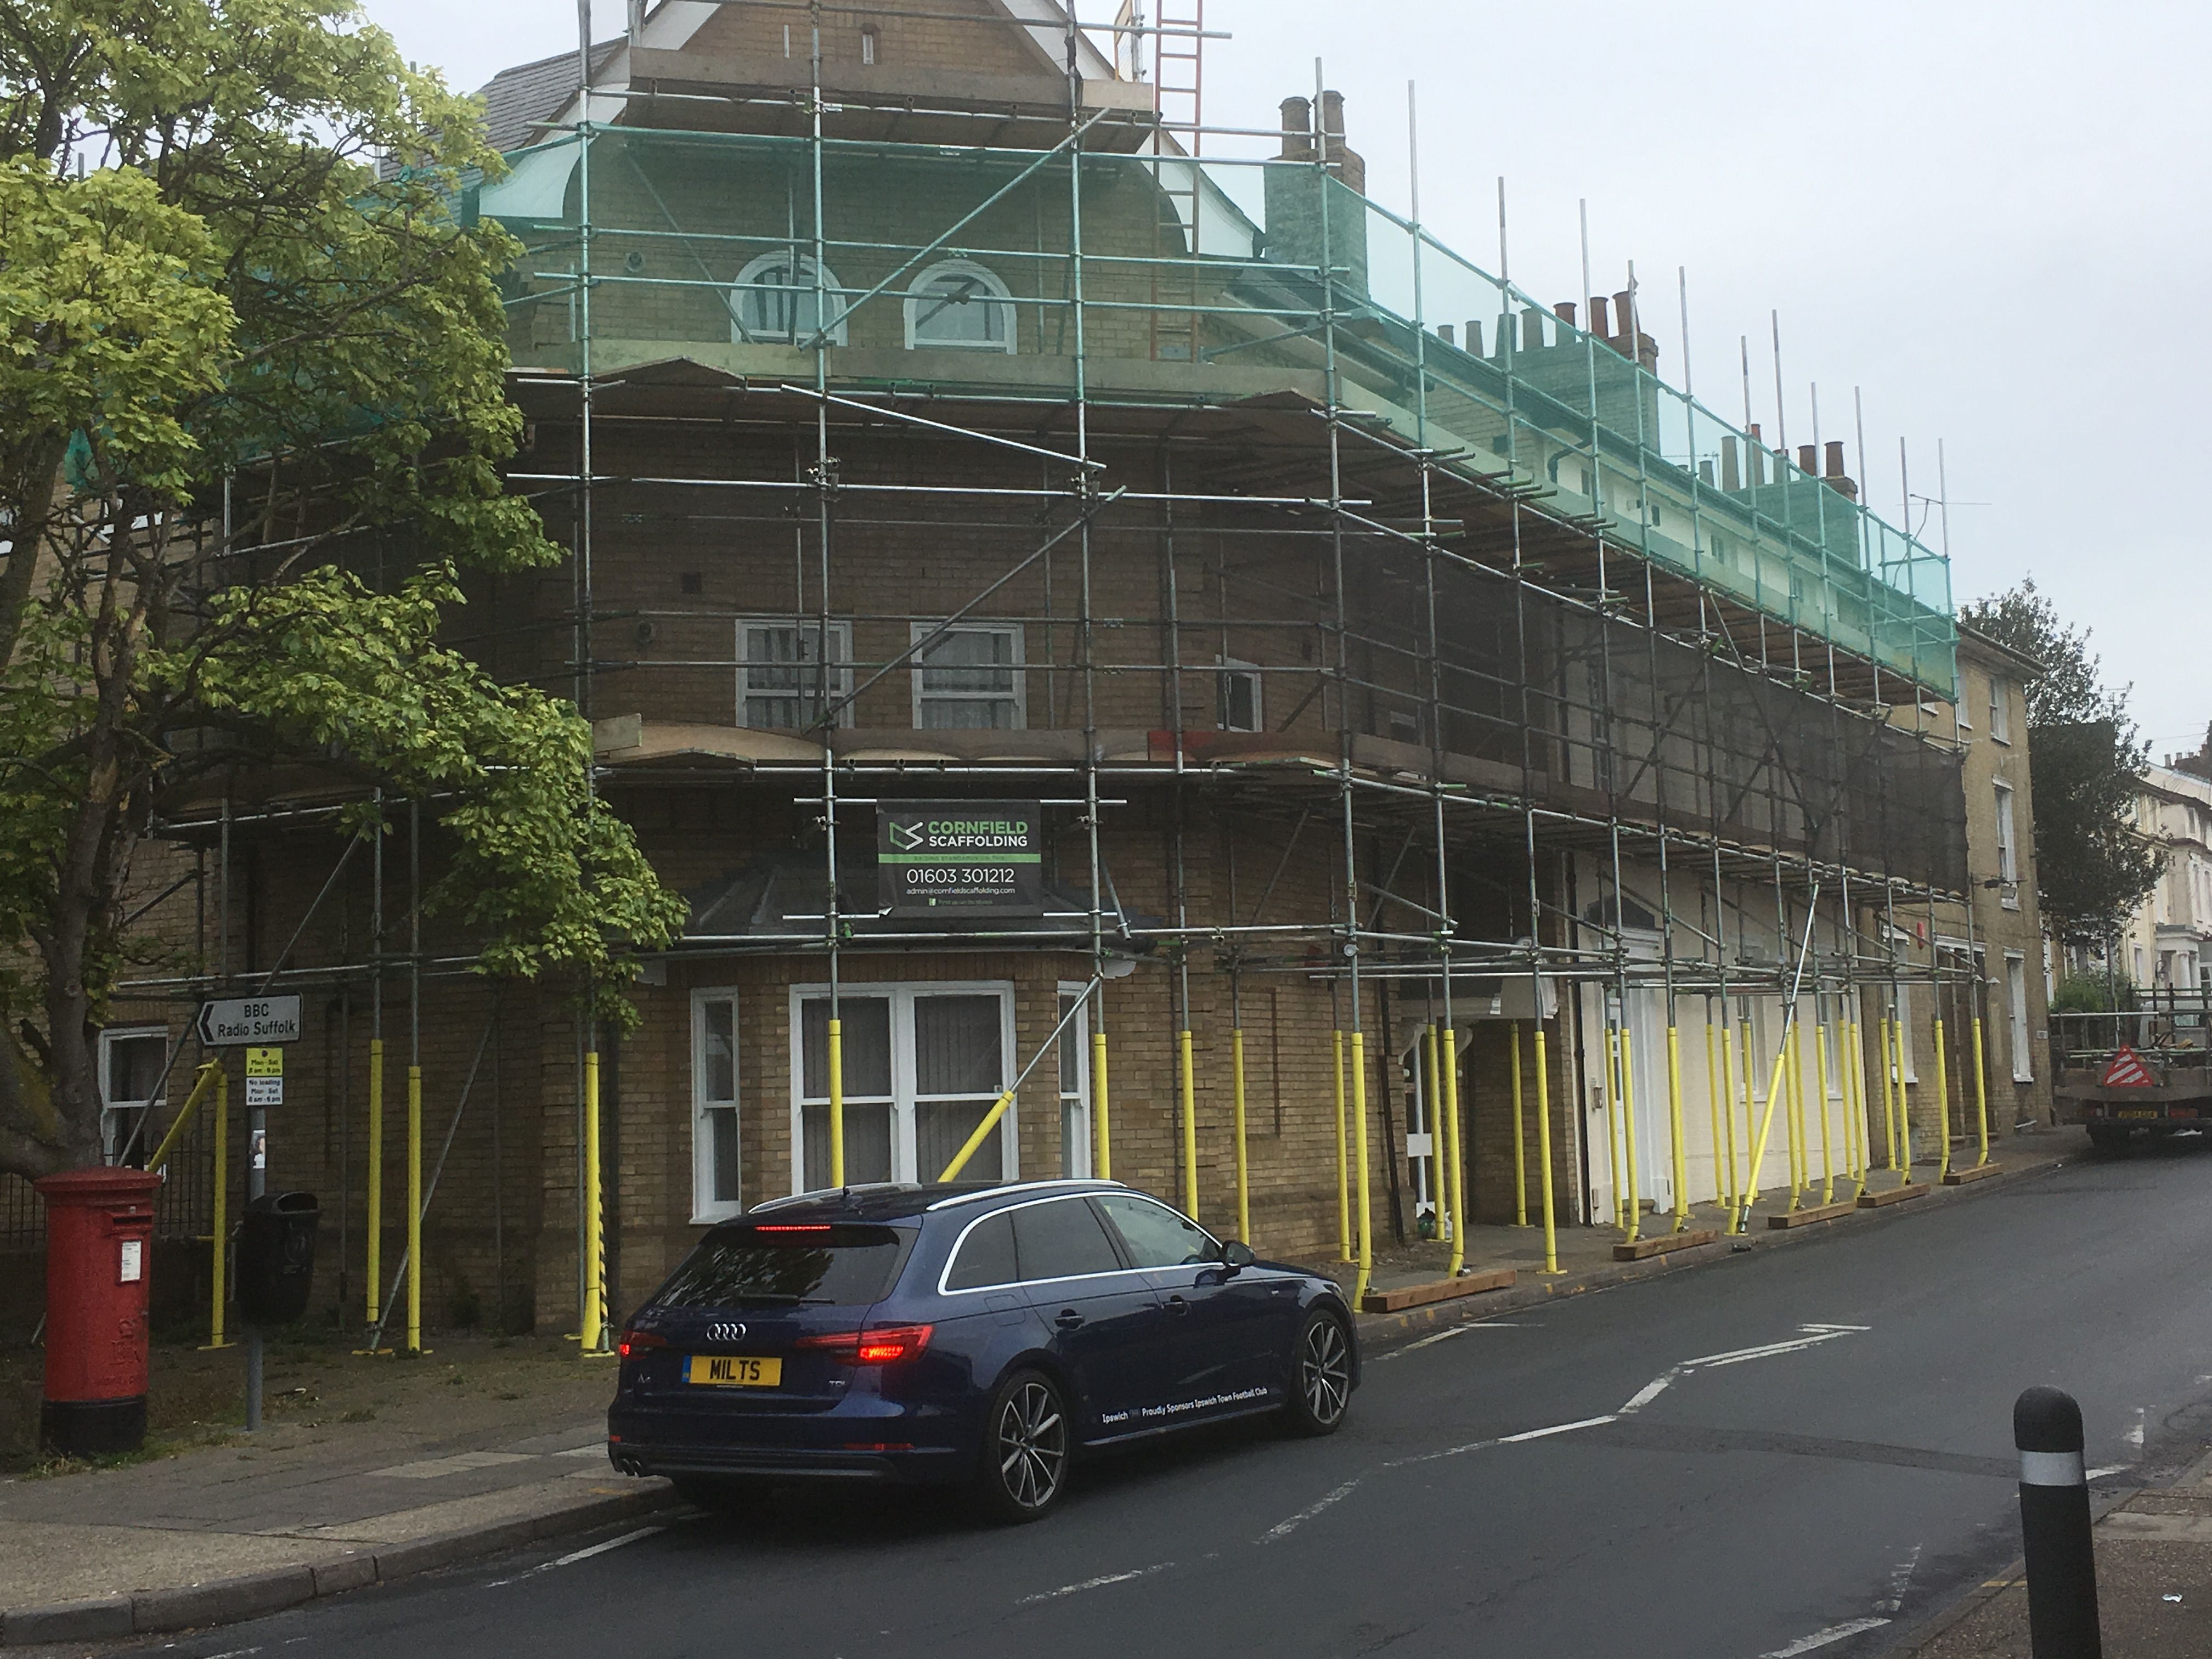 Scaffold scaffolding Ipswich Cornfield safe access summer 